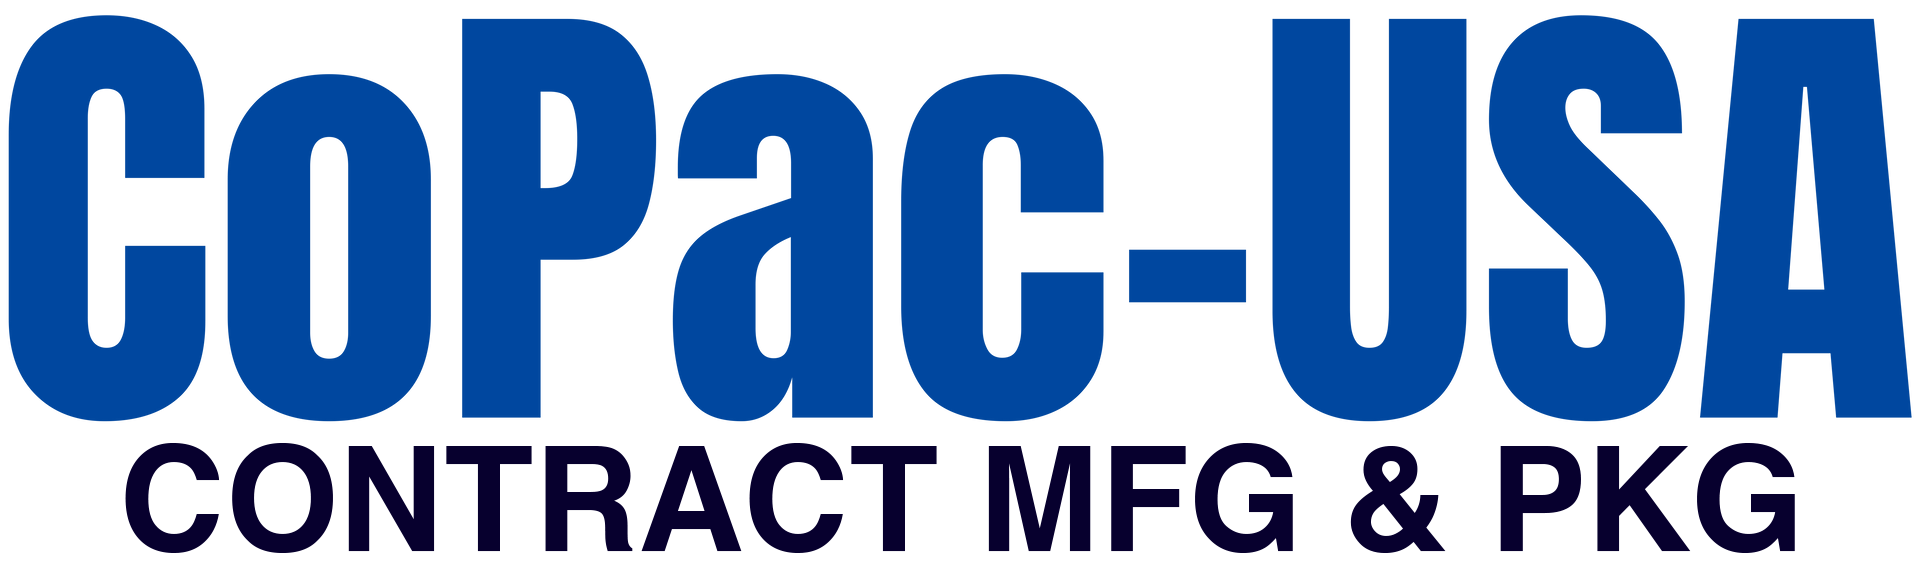 Copac USA, LLC Logo